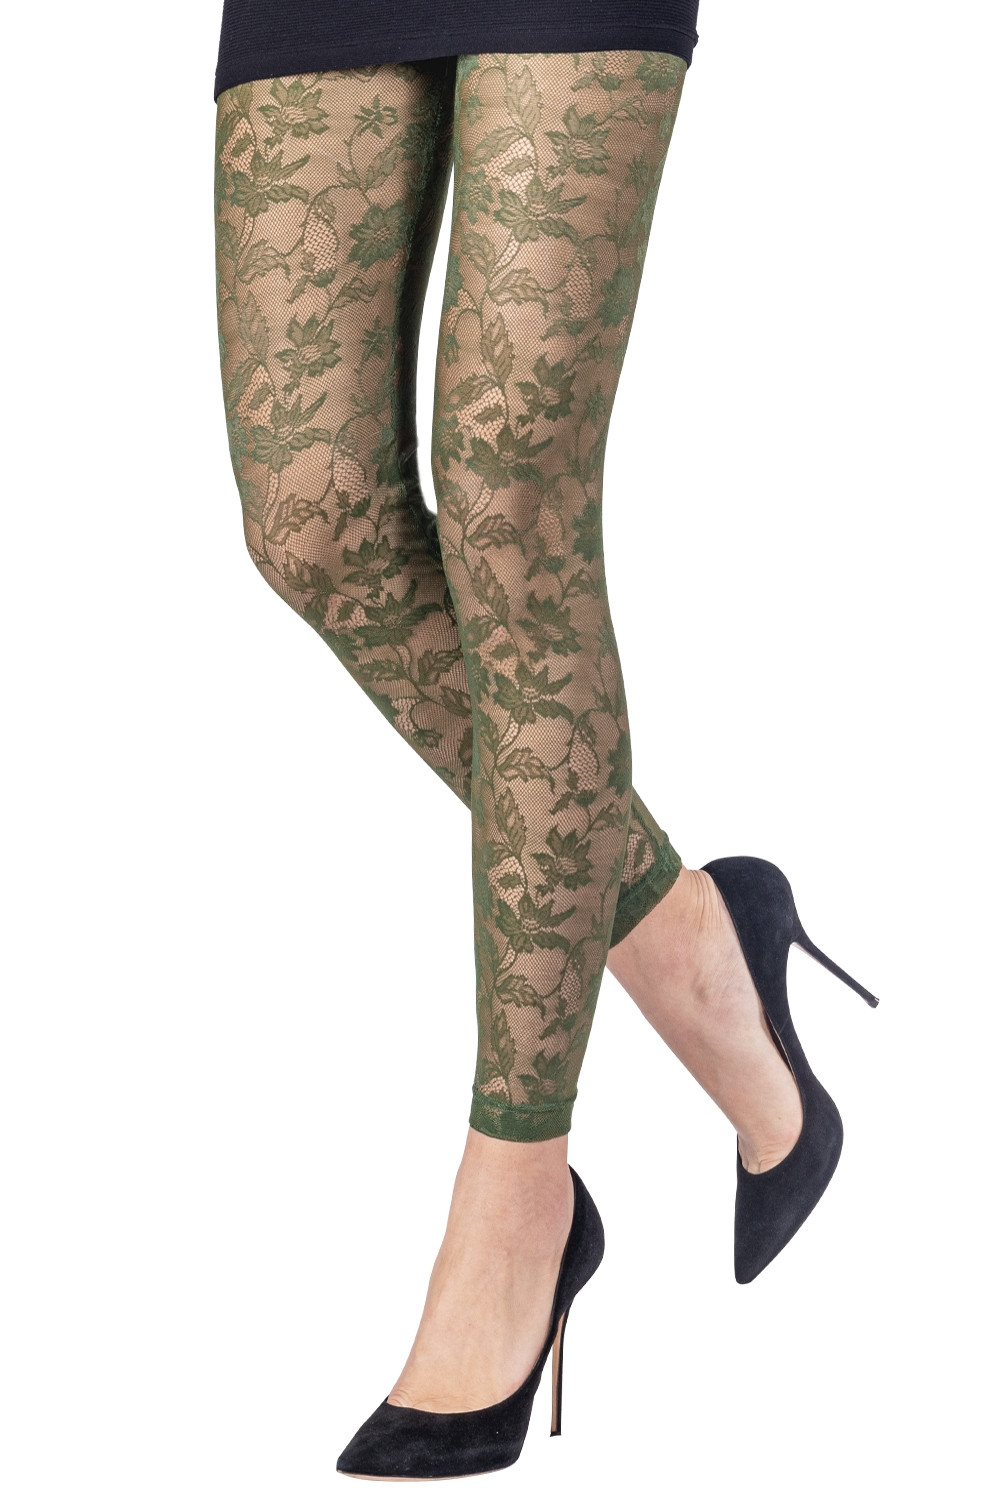 Nimble Lauren 7/8 Length Legging - Womens - Jungle Leaf Print